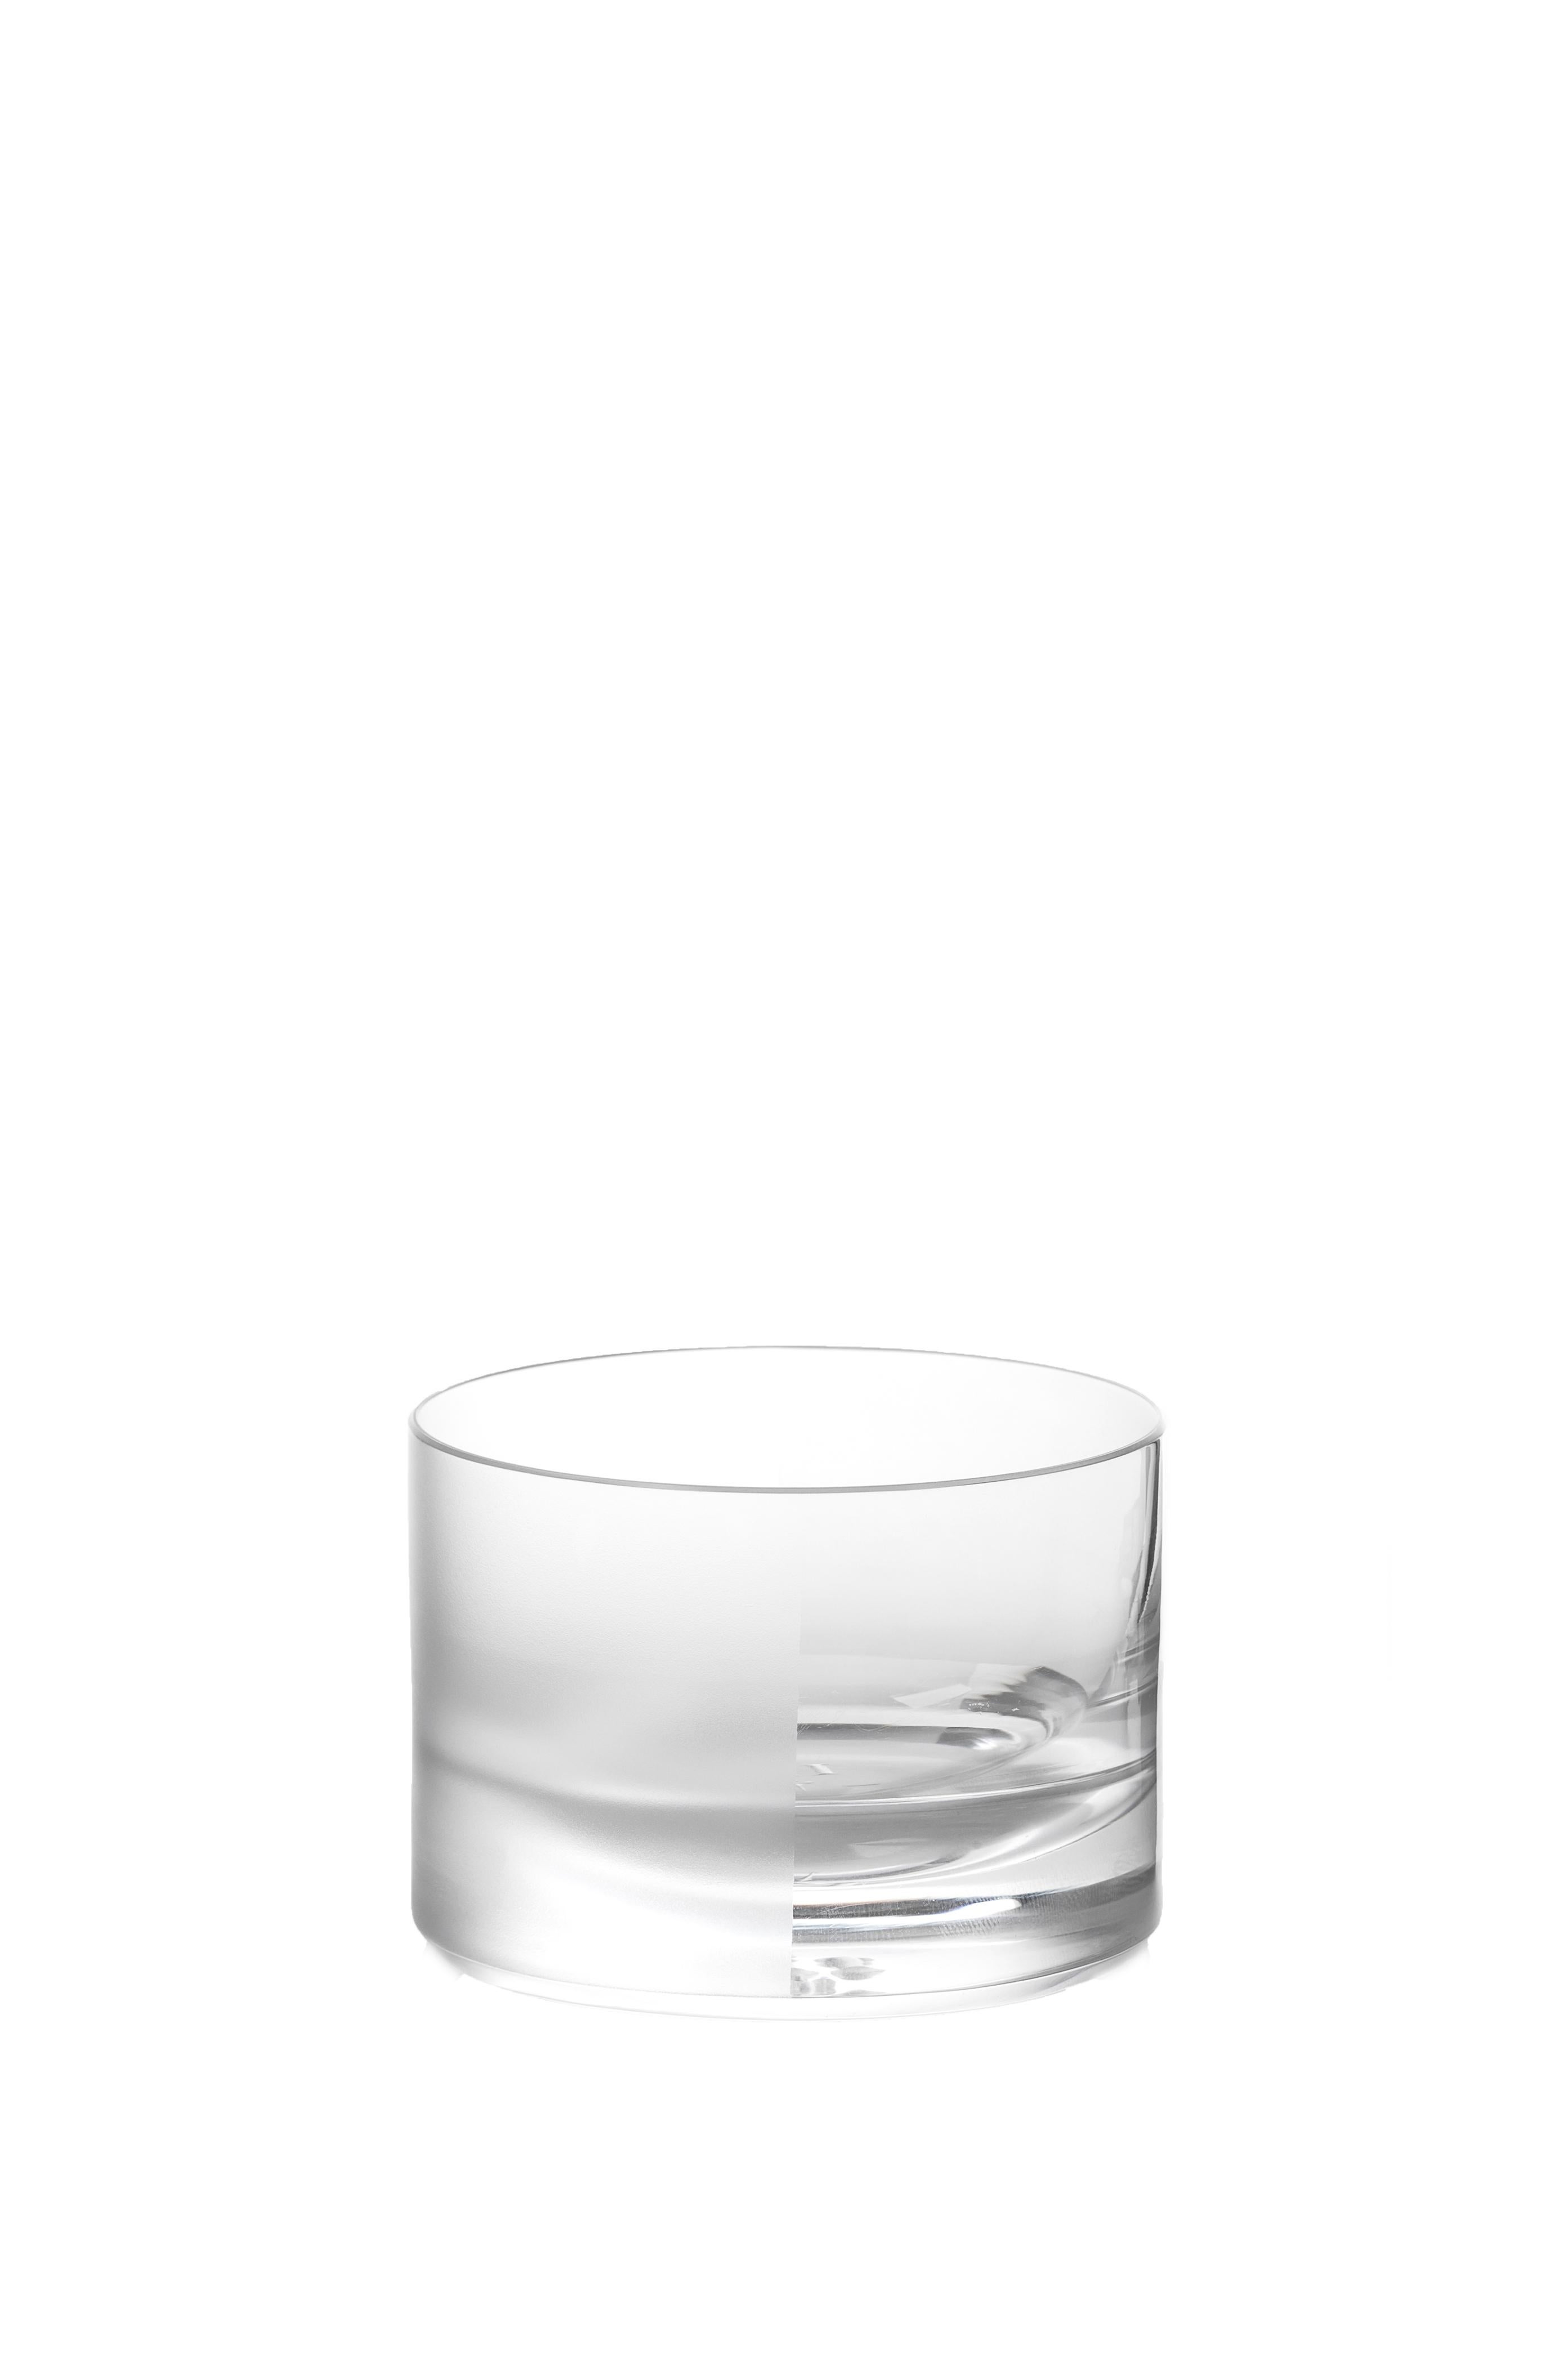 Scholten & Baijings Handmade Irish Crystal Low Glass 'Elements' Series CUT NO VI For Sale 1